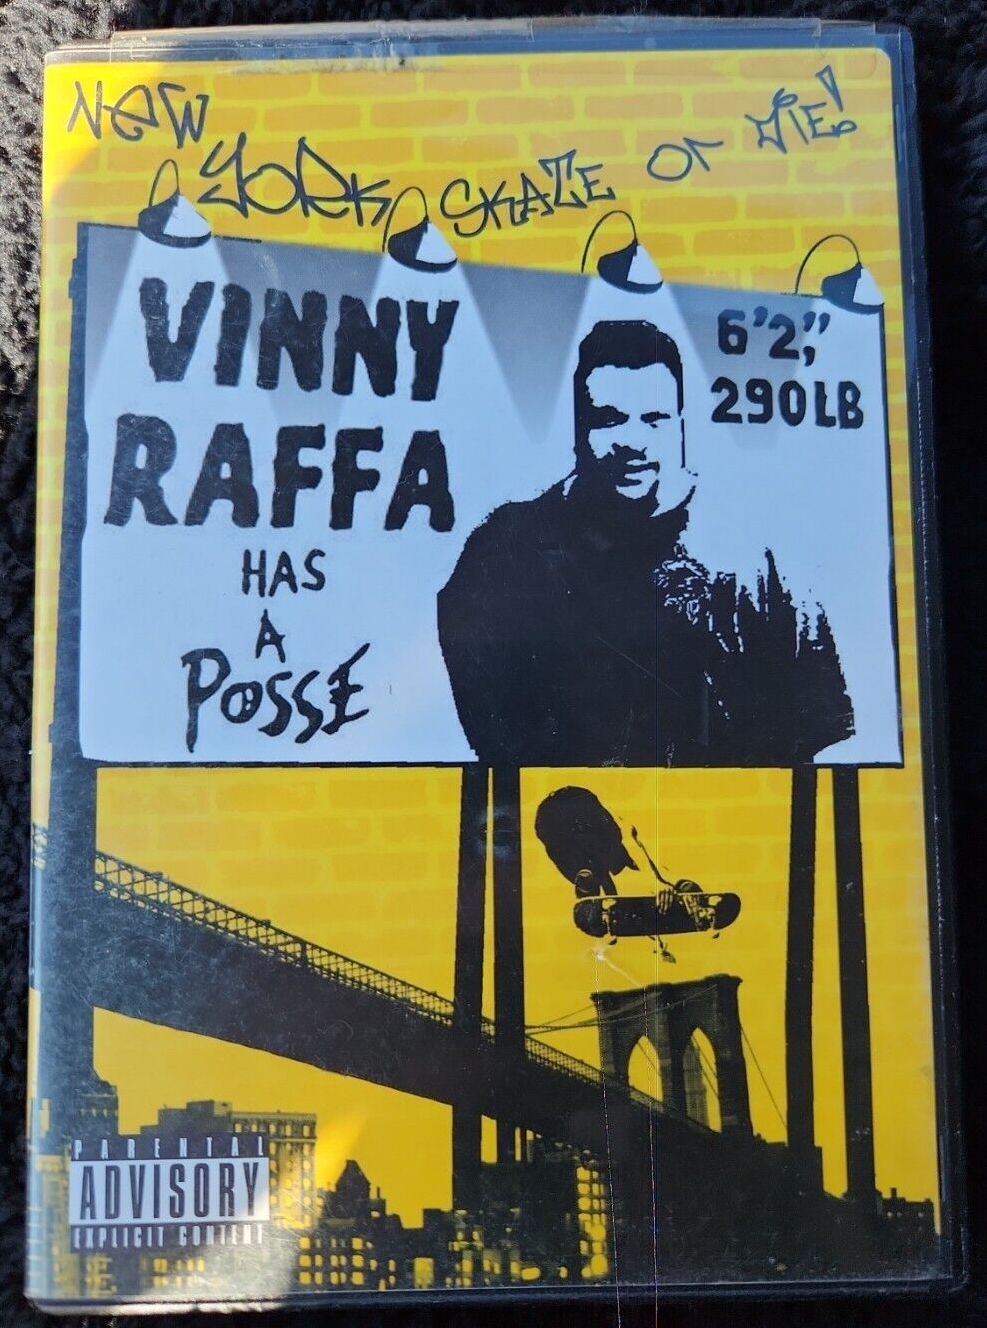 Vinny Raffa Has A Posse cover art